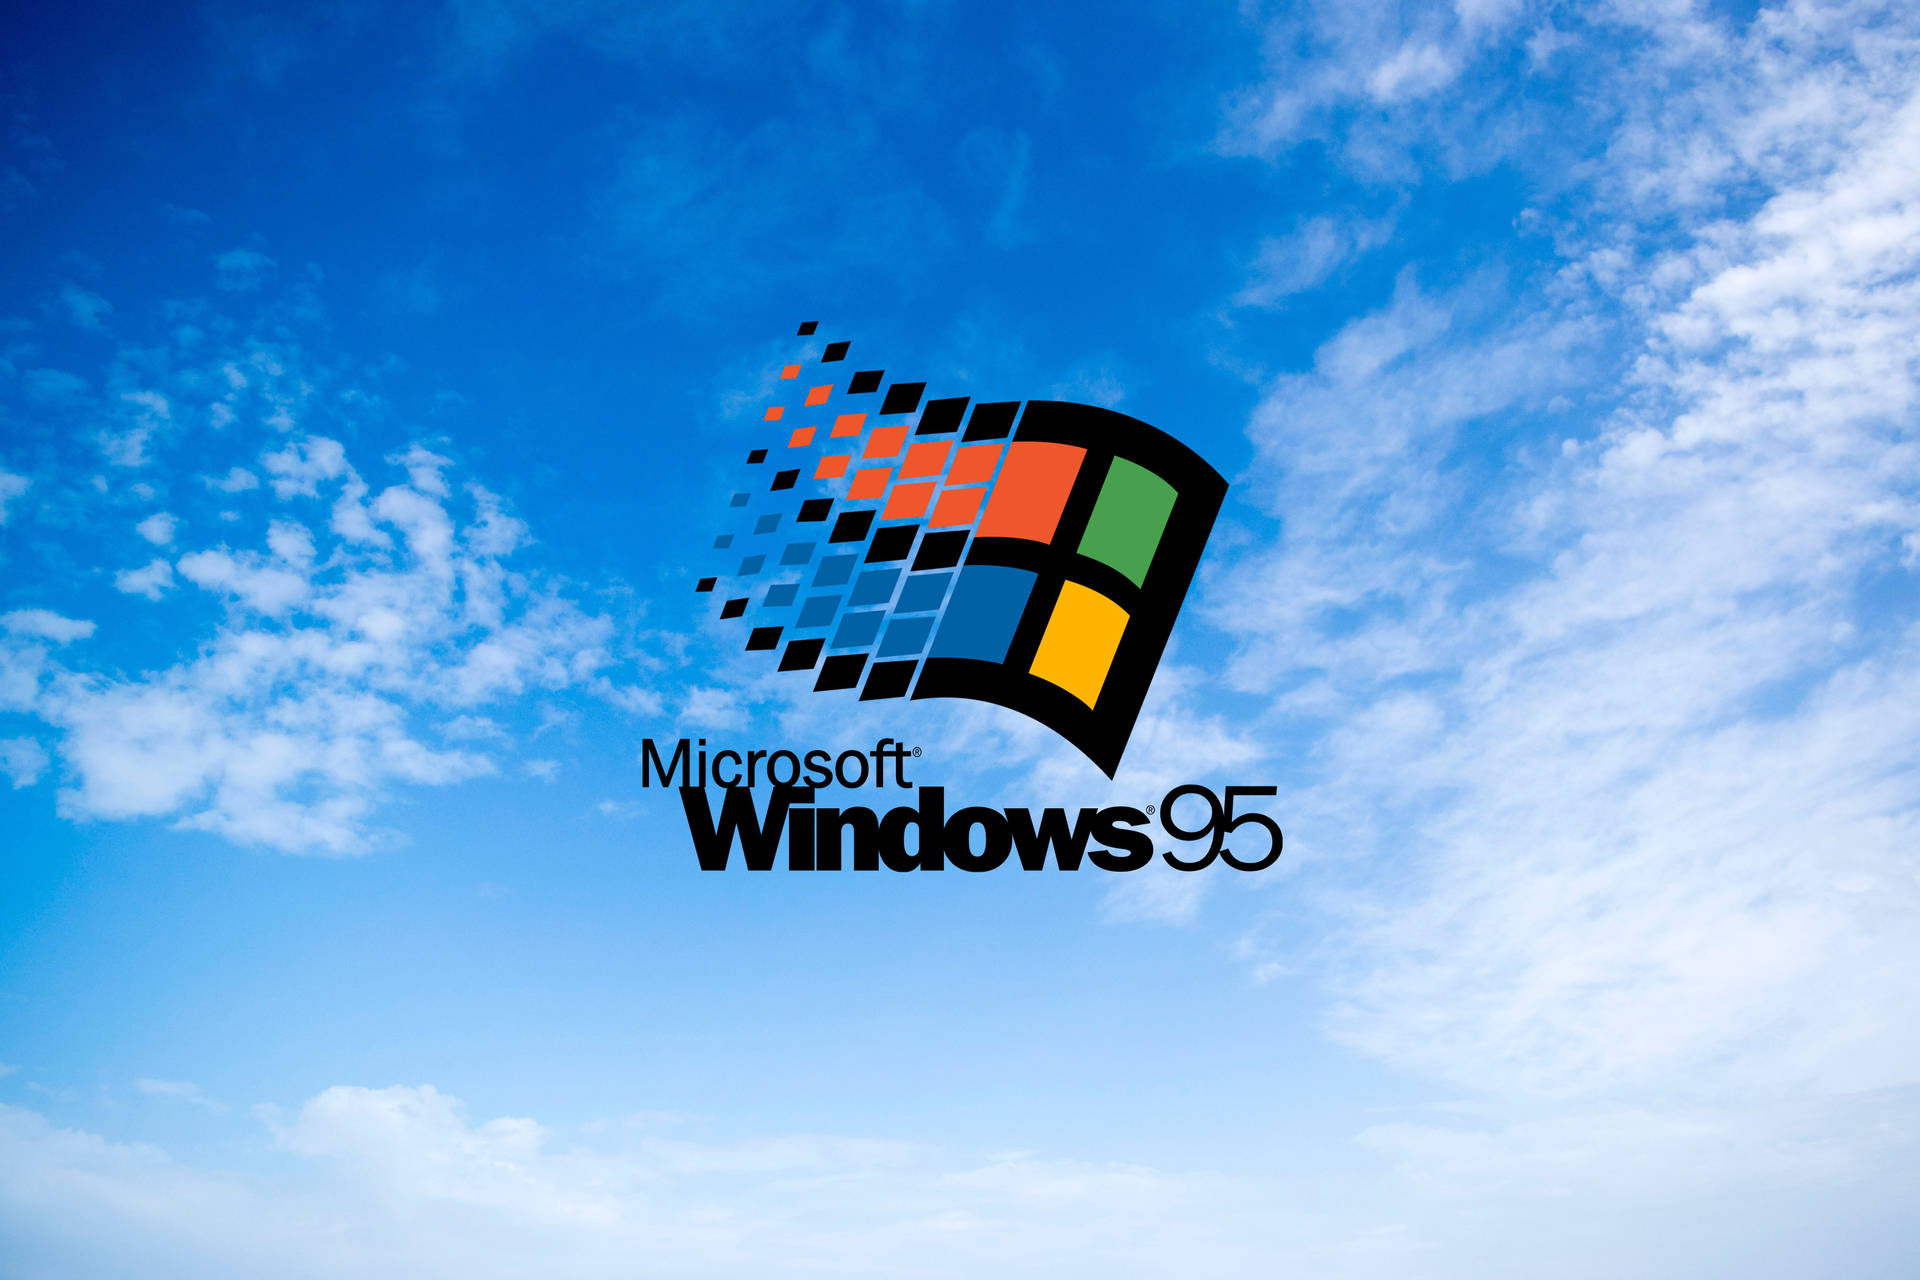 Ms Windows 95 In Sky Background